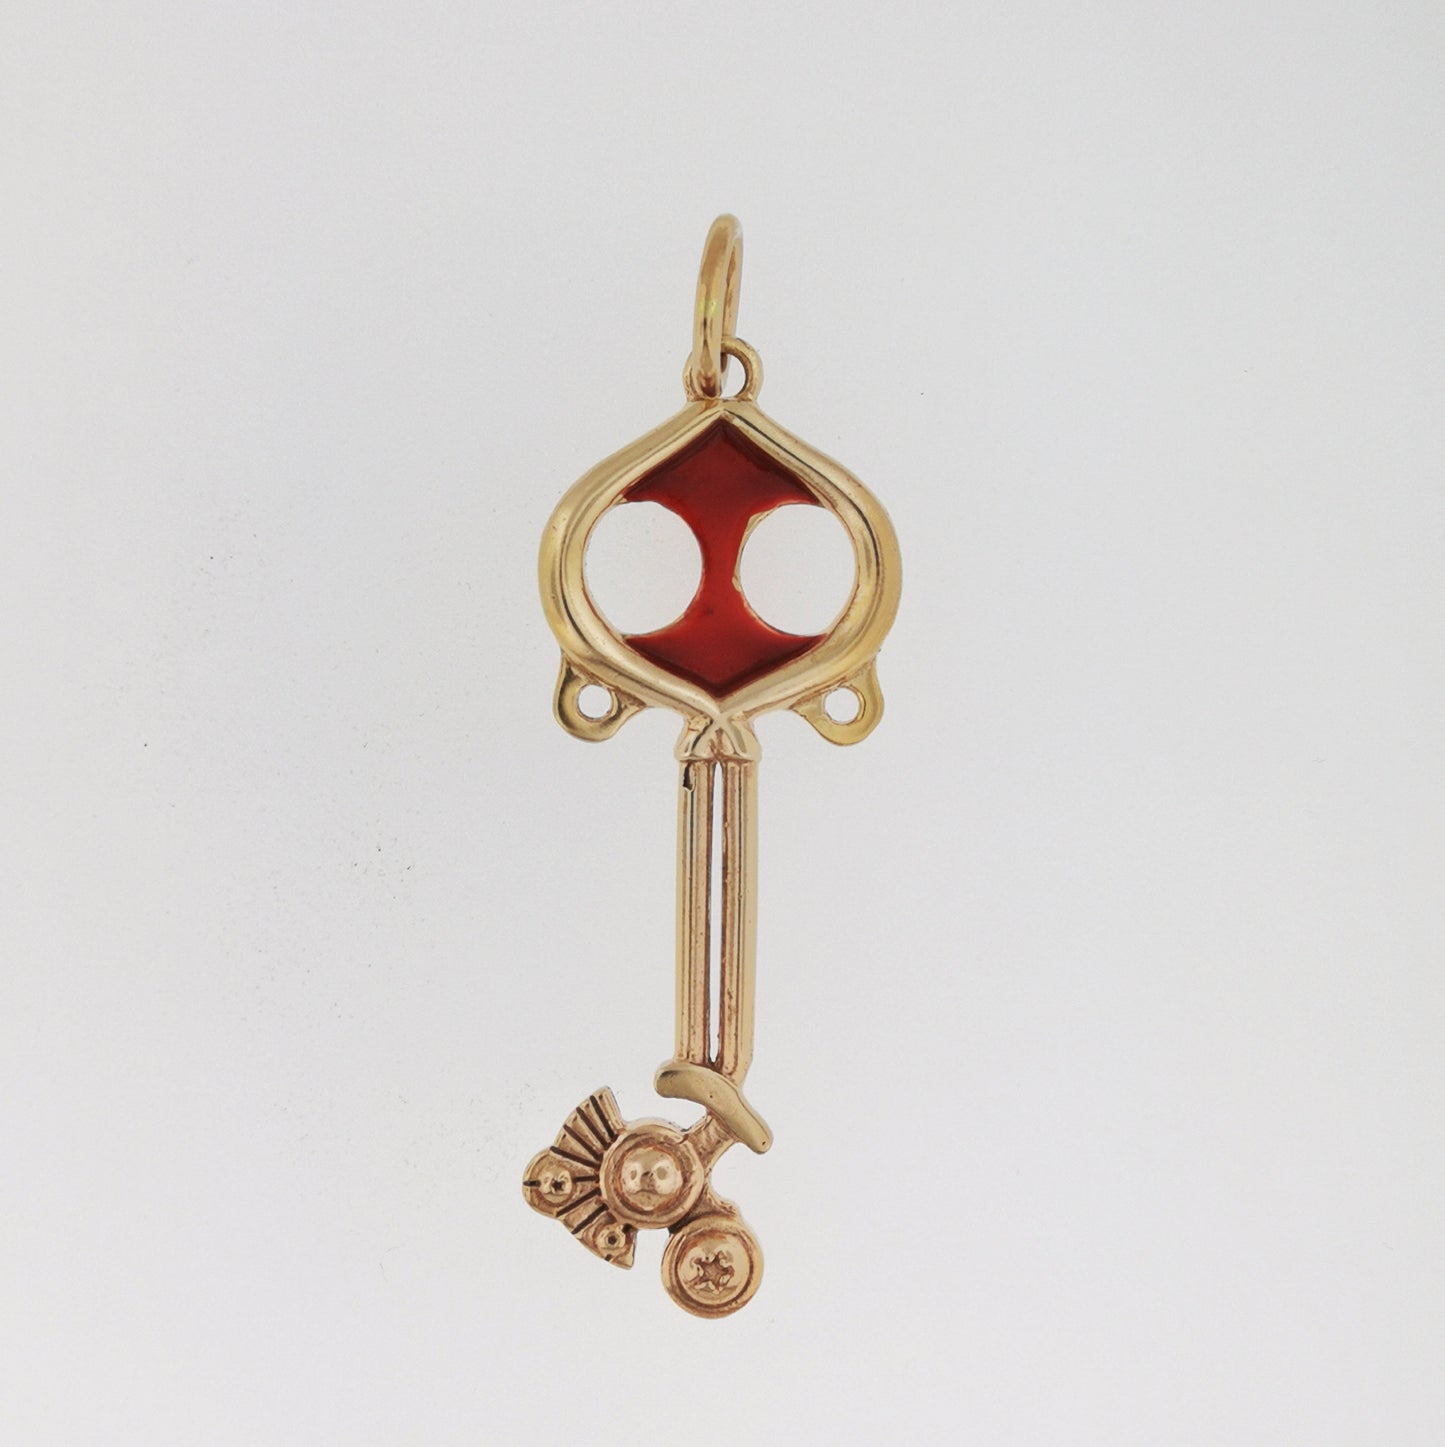 Kingdom Hearts Spellbinder Keyblade pendant in Antique Bronze